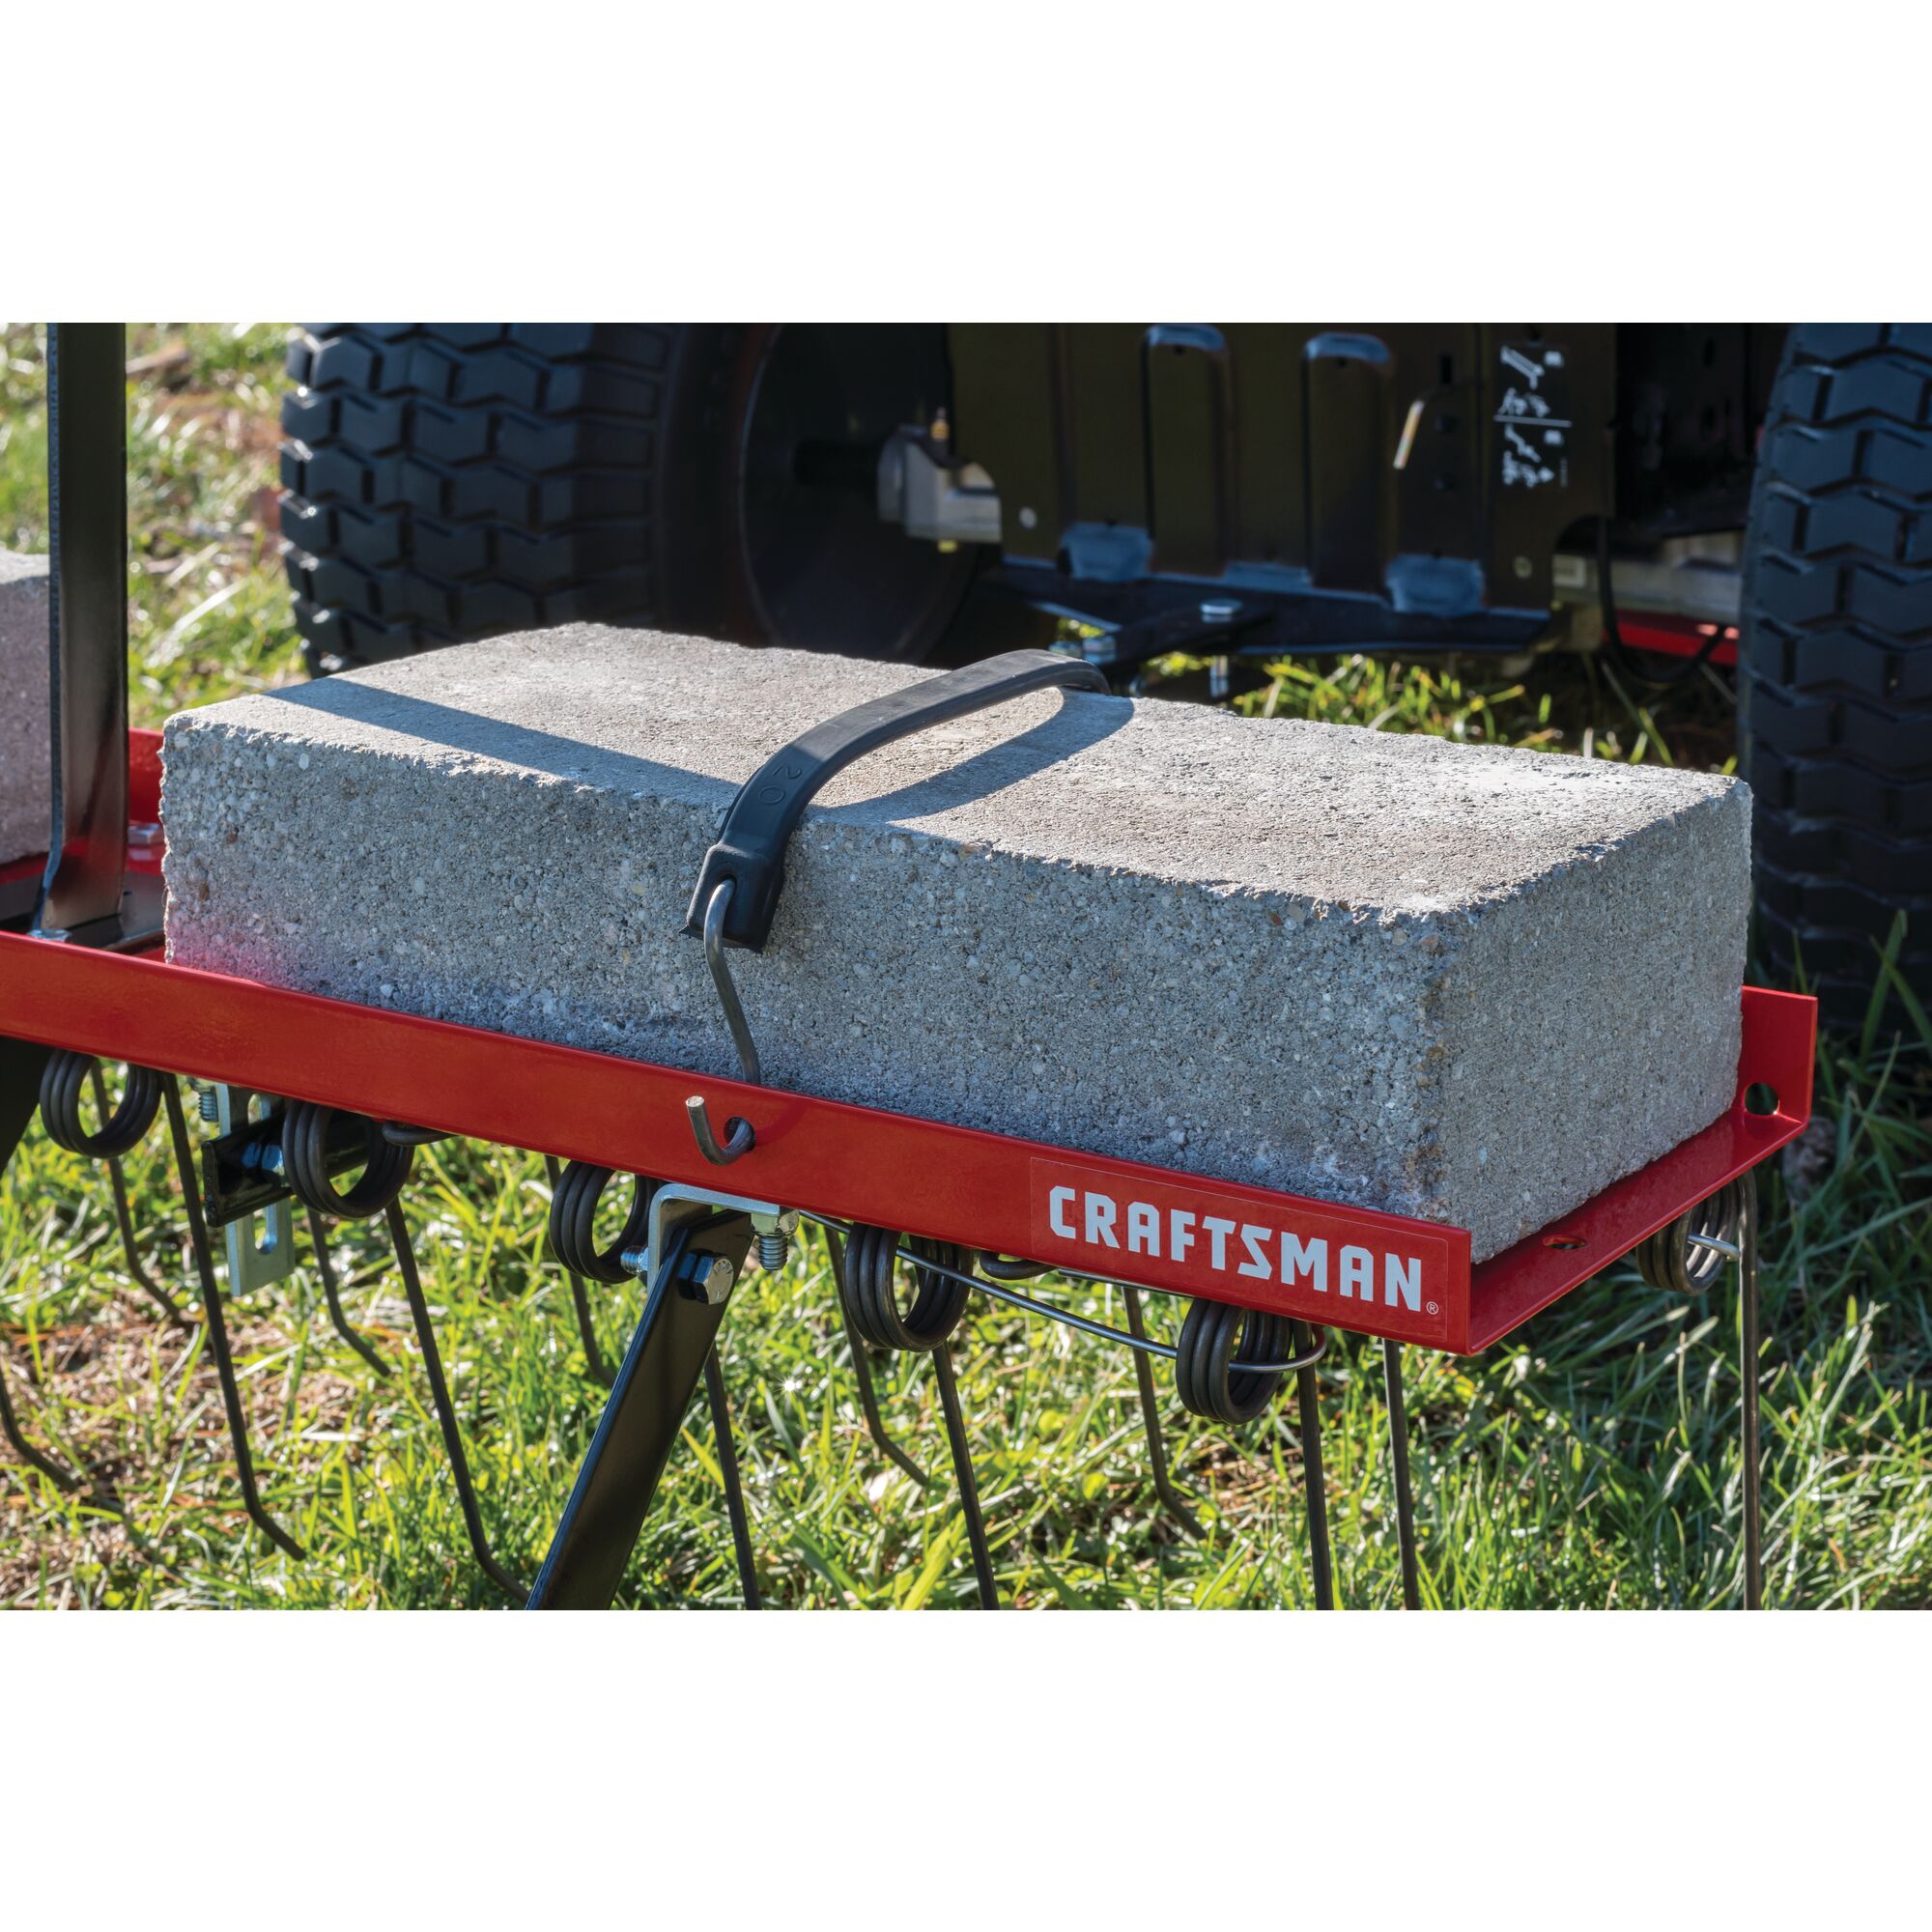 Added soil penetration feature of 40 inch rear mount dethatcher.